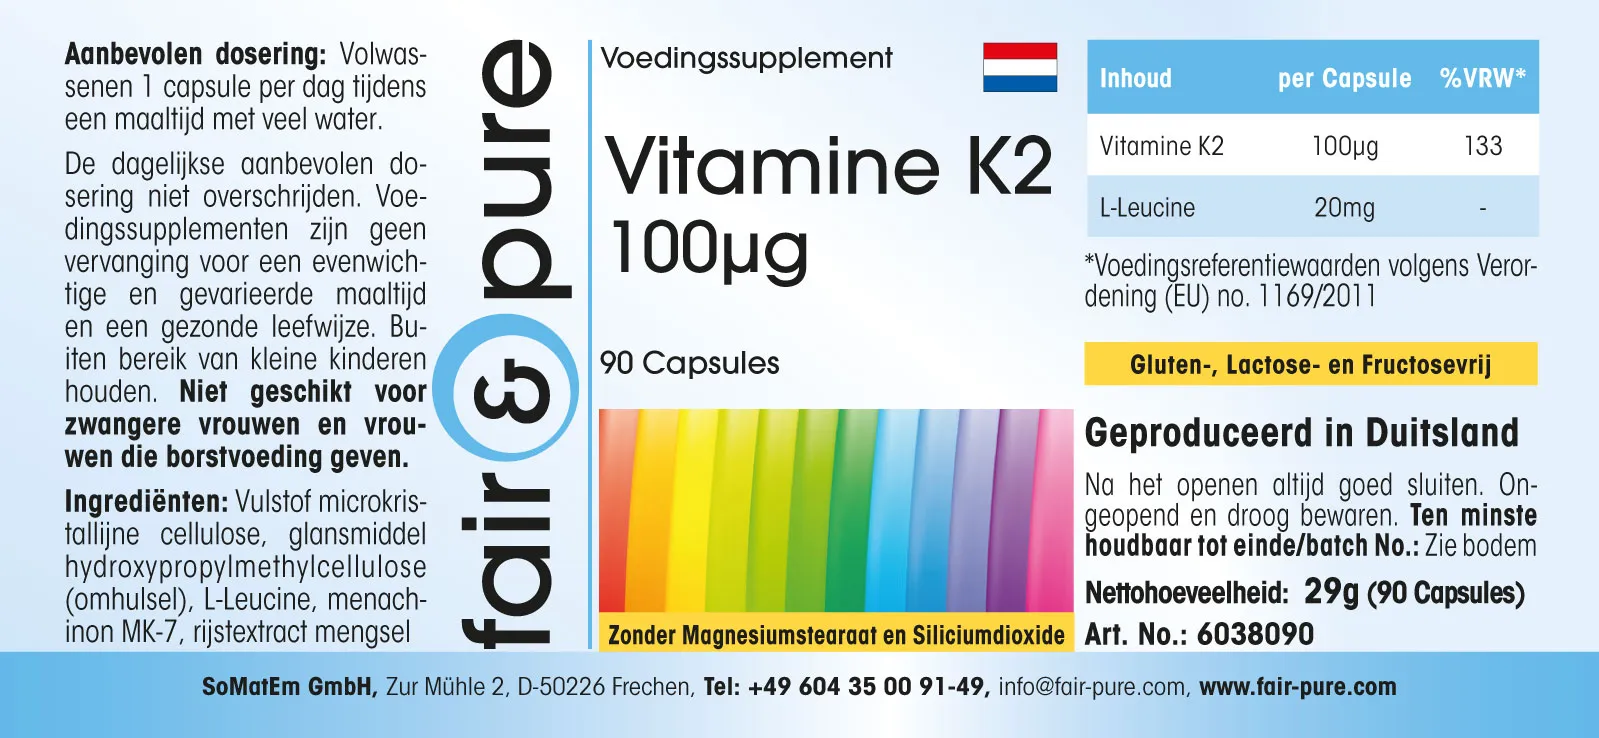 Vitamina K2 100µg